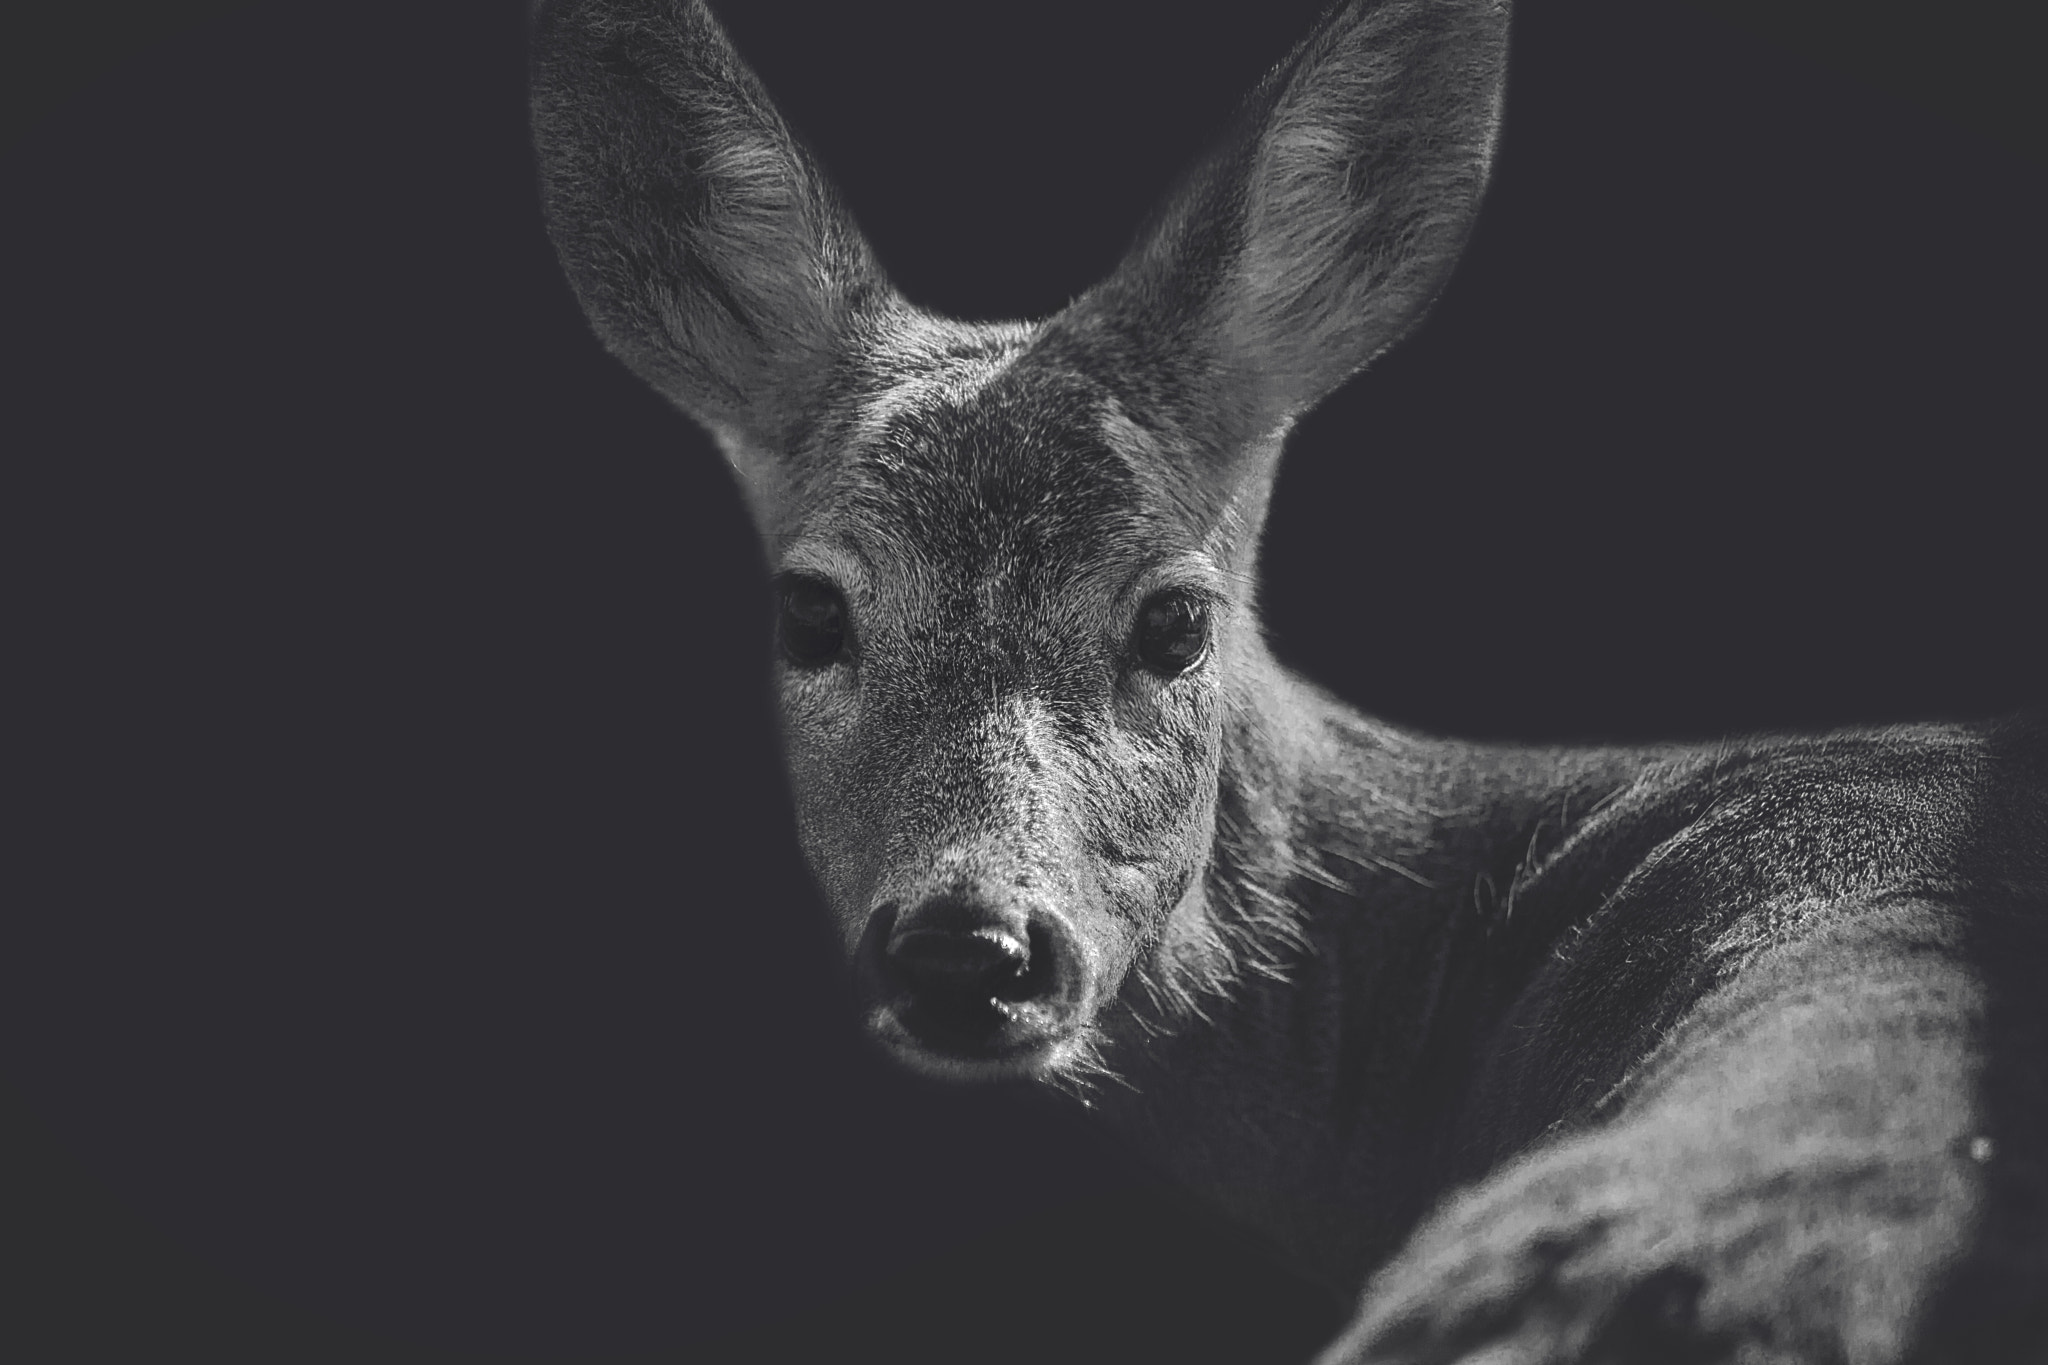 General 2048x1365 animals deer closeup monochrome